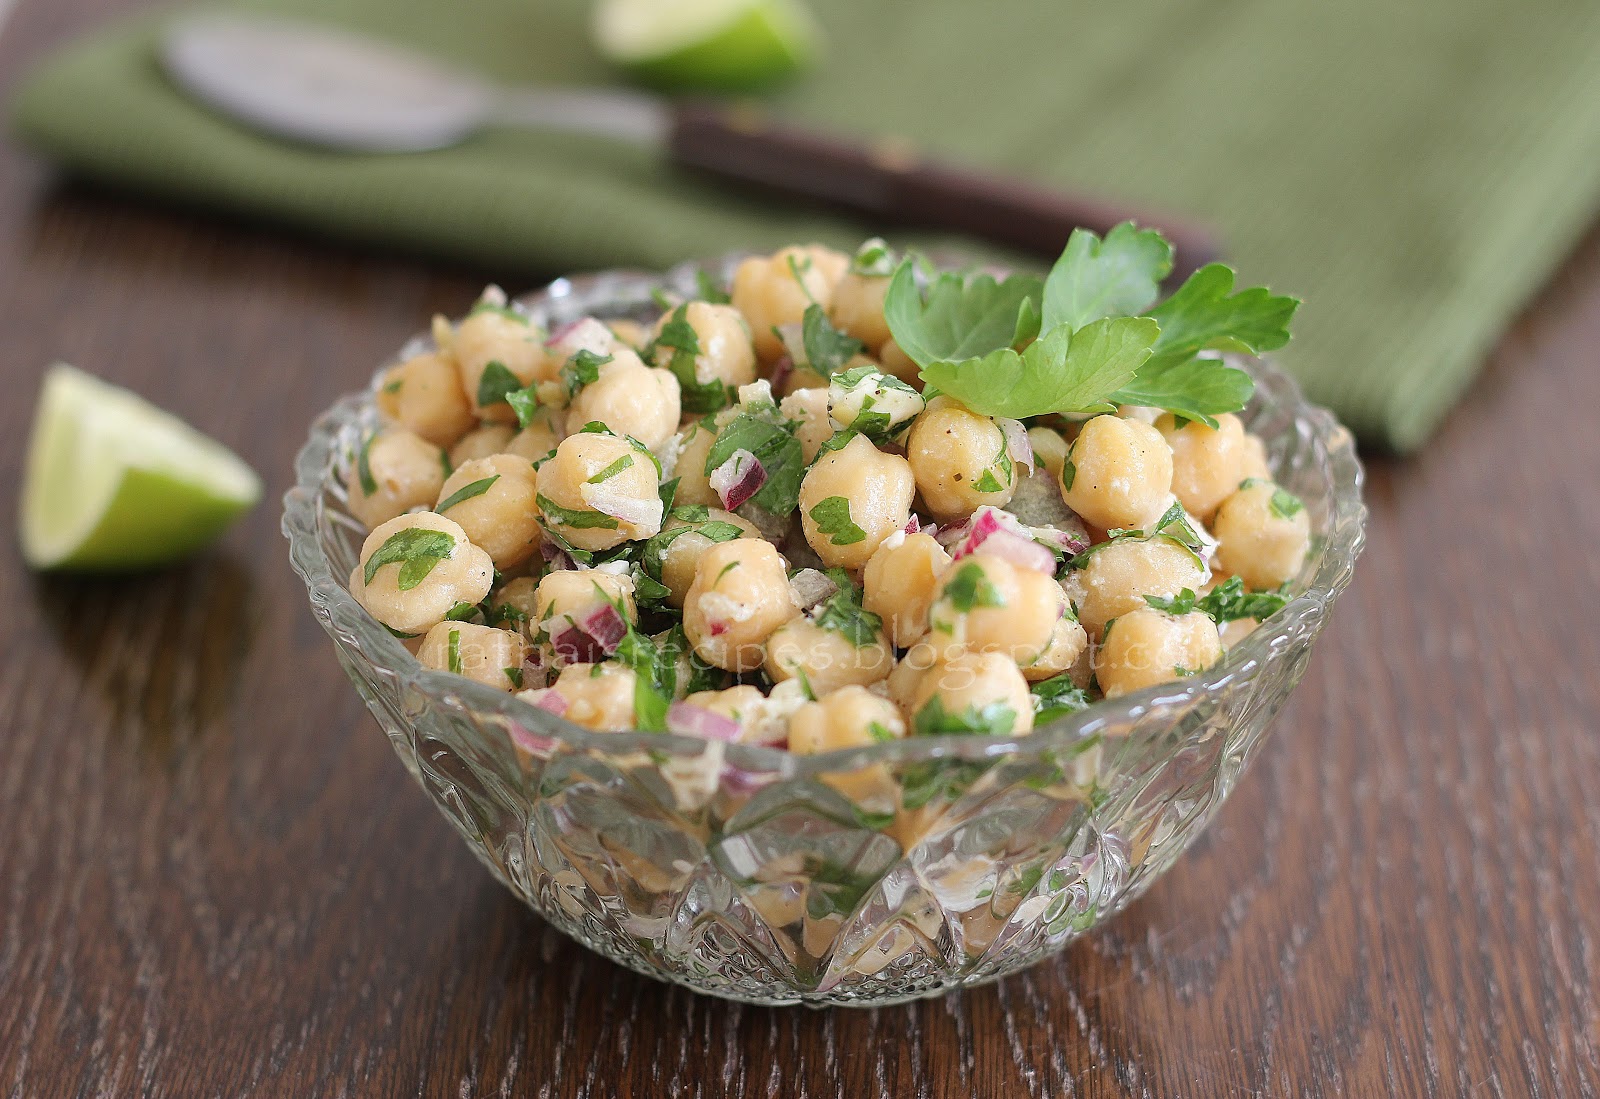 Rathai's Recipes: Middle Eastern Salad